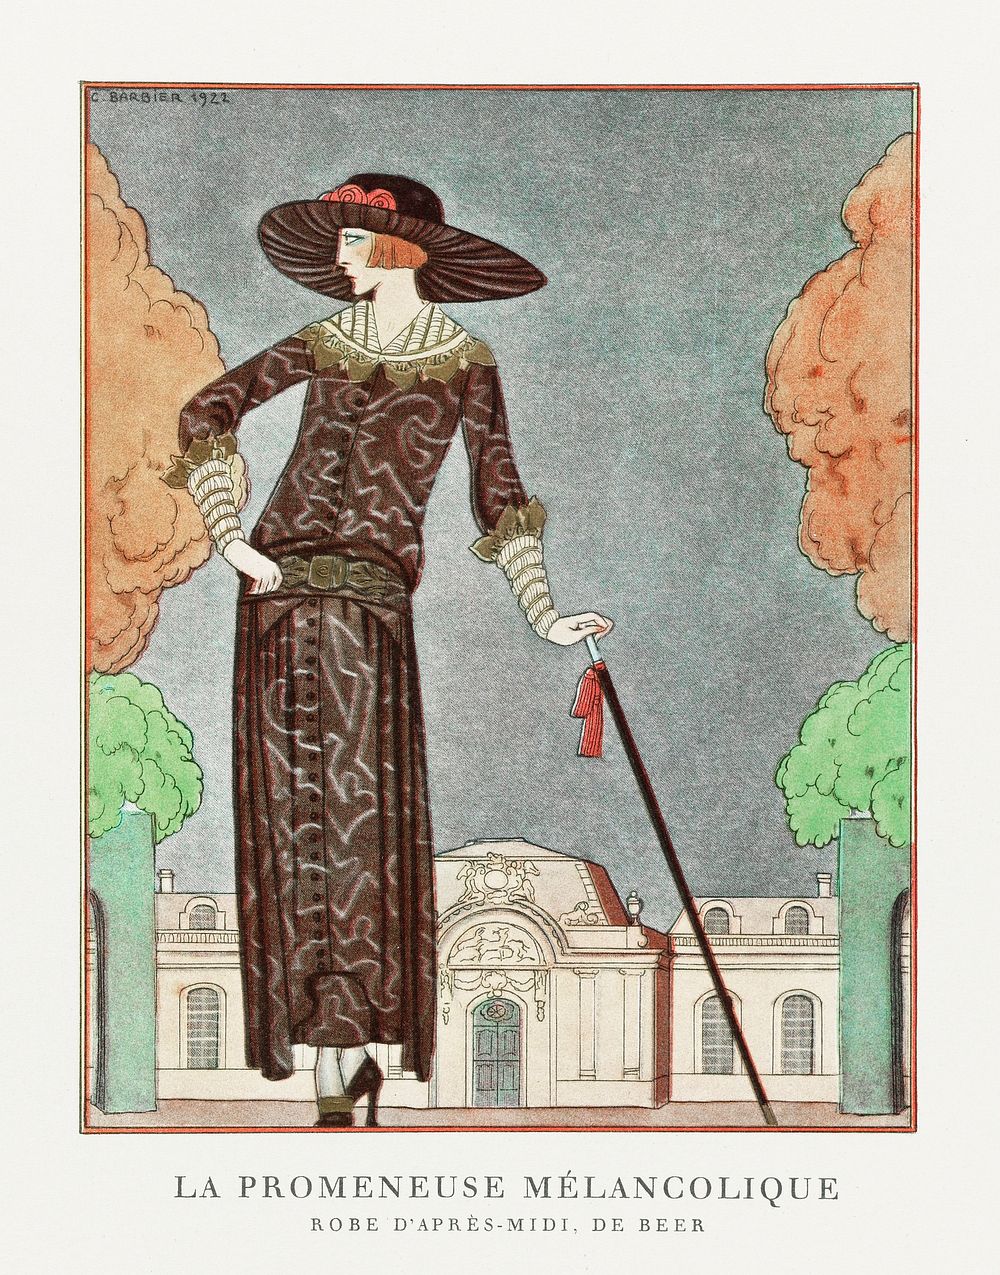 La promeneuse m&eacute;lancolique, Robe d'apr&egrave;s-midi, de Beer (1922) fashion illustration in high resolution by…